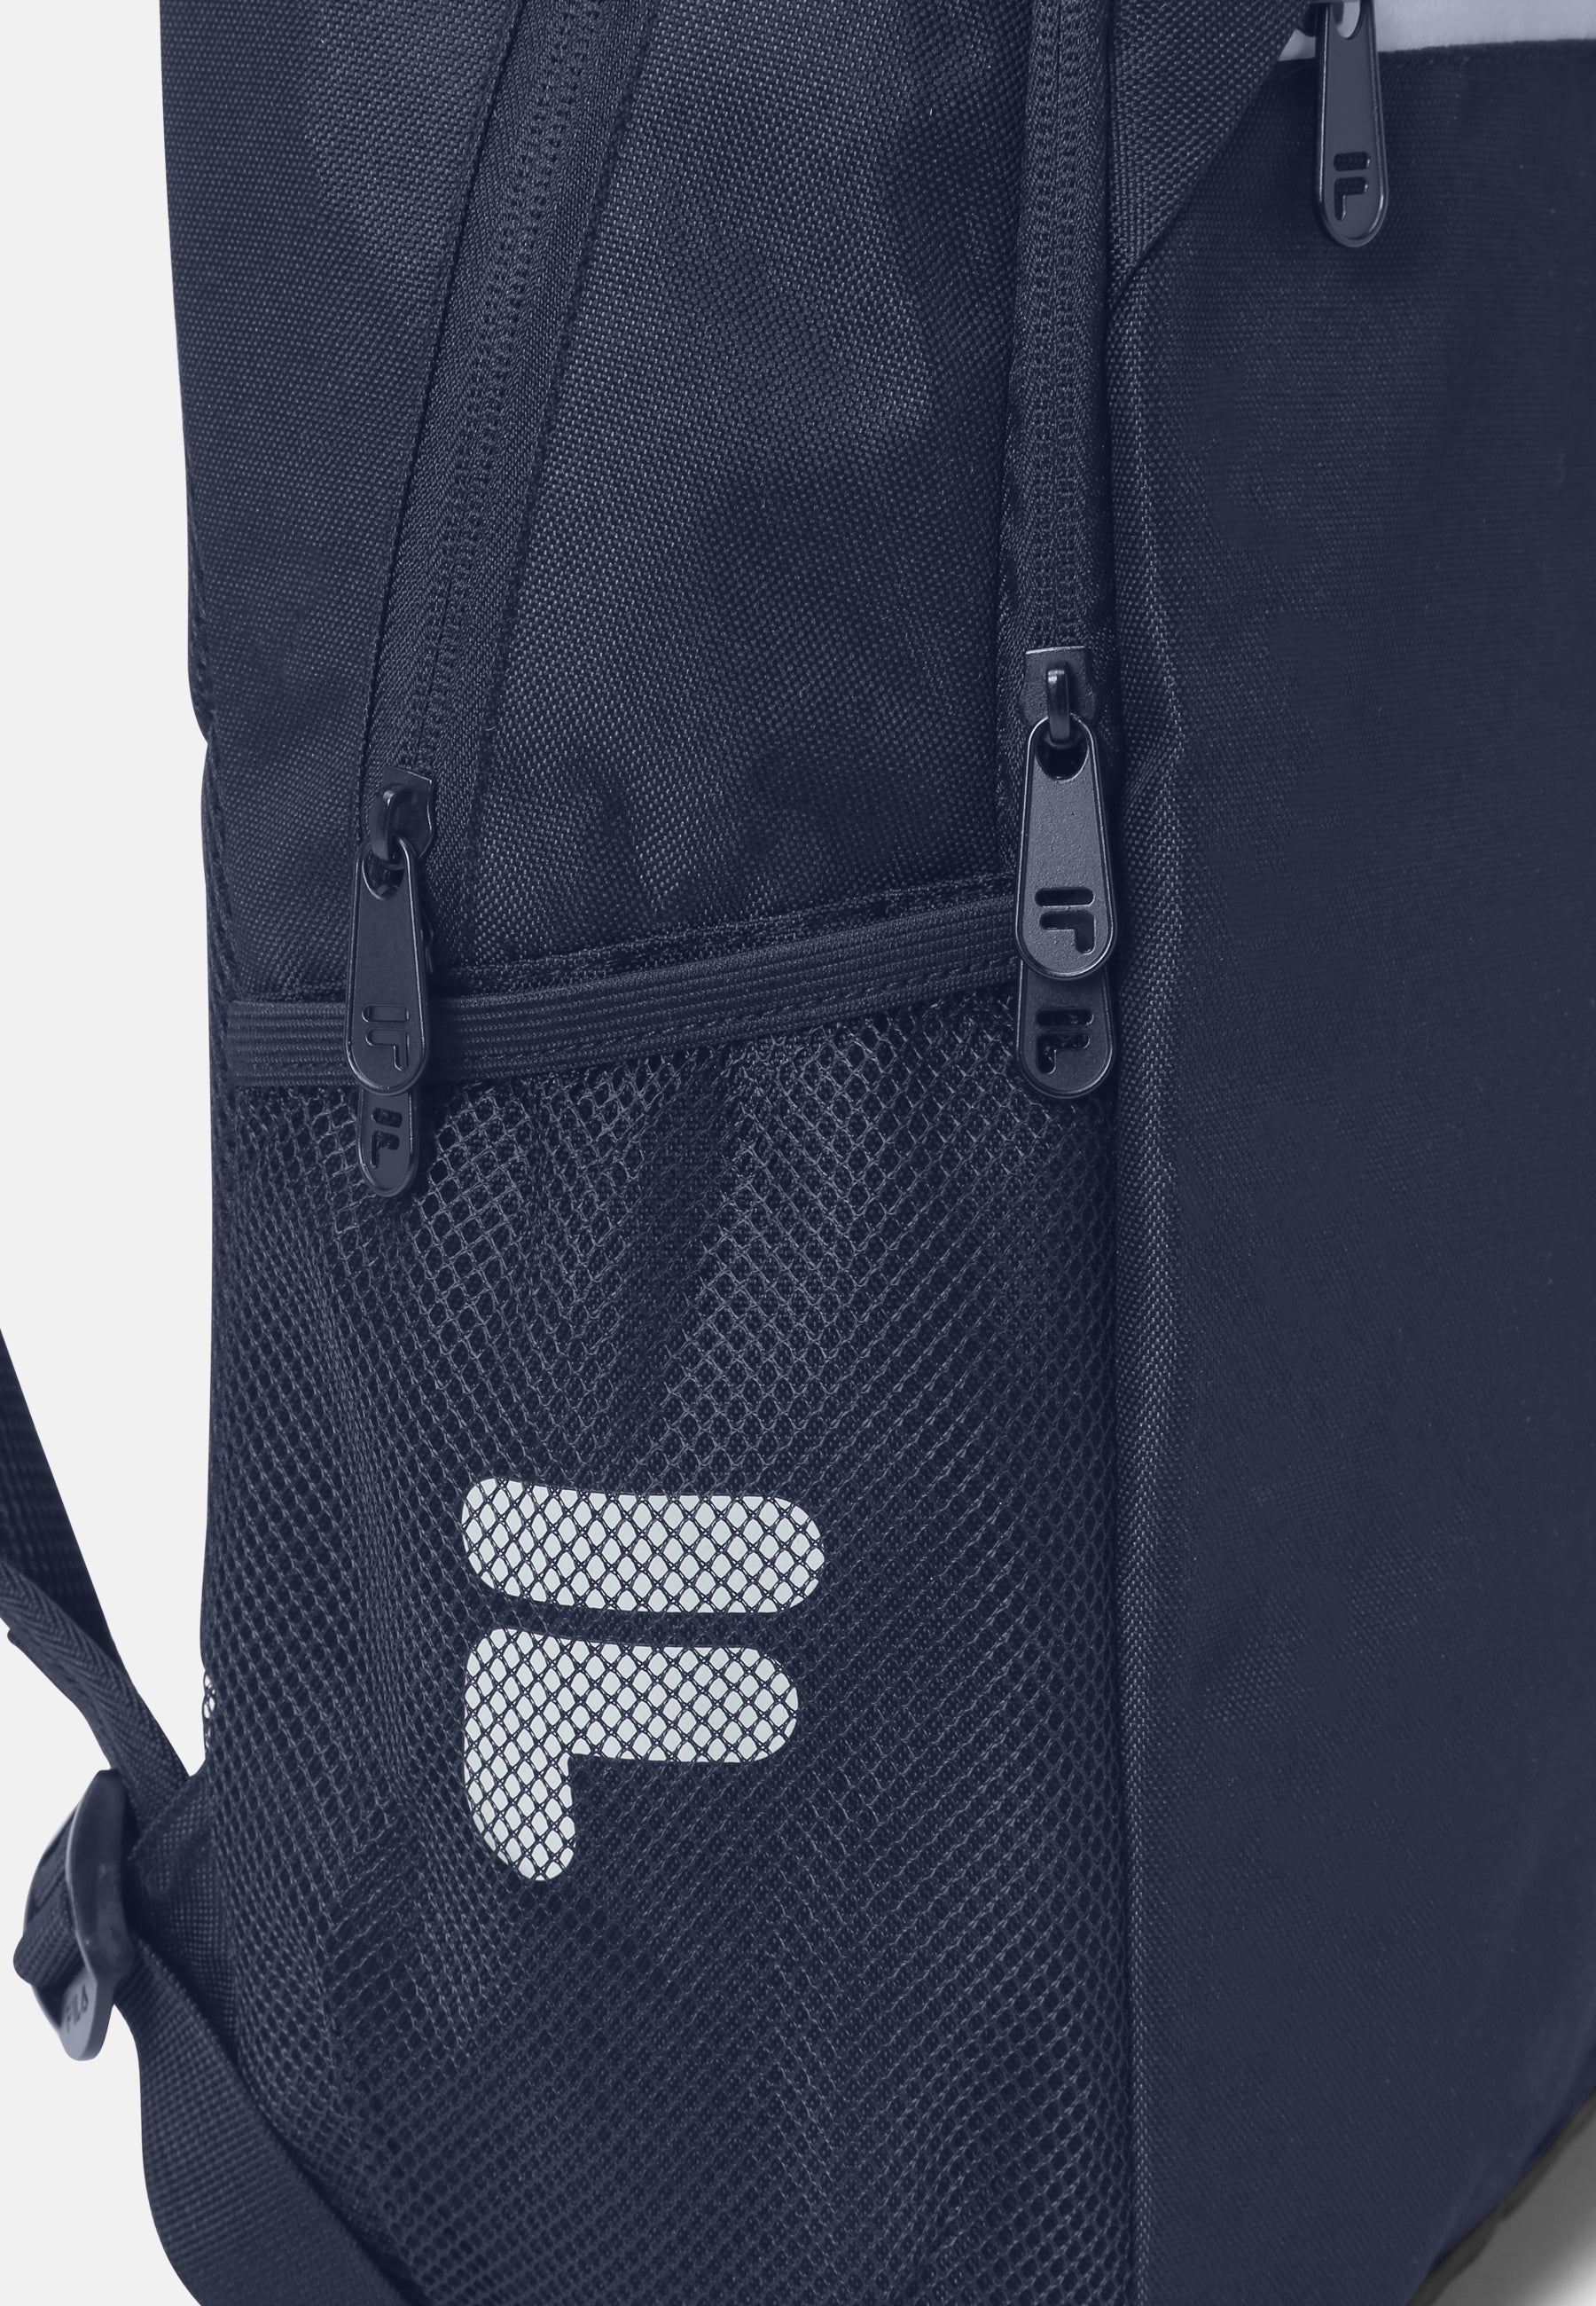 Folsom Active Vertical Backpack in Black Iris Rucksäcke Fila   